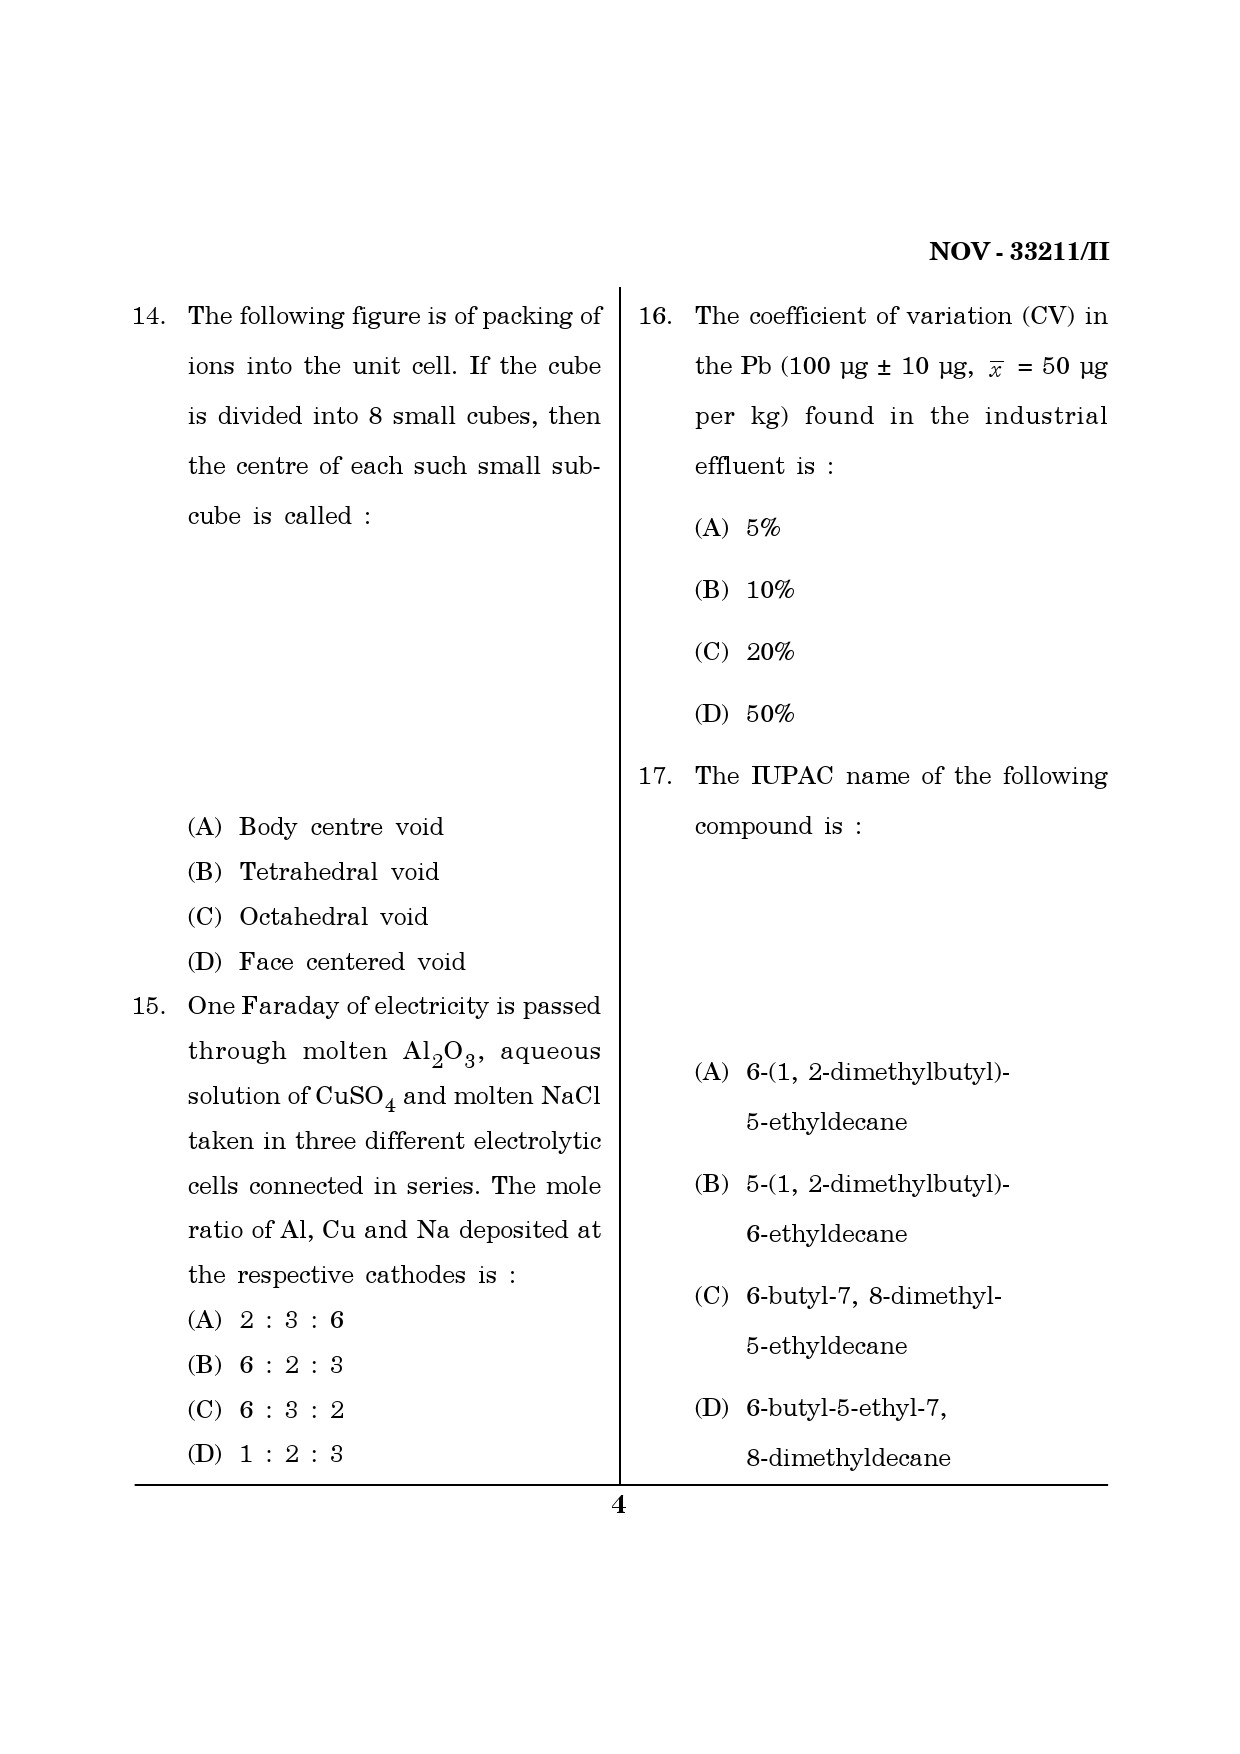 Maharashtra SET Chemical Sciences Question Paper II November 2011 4